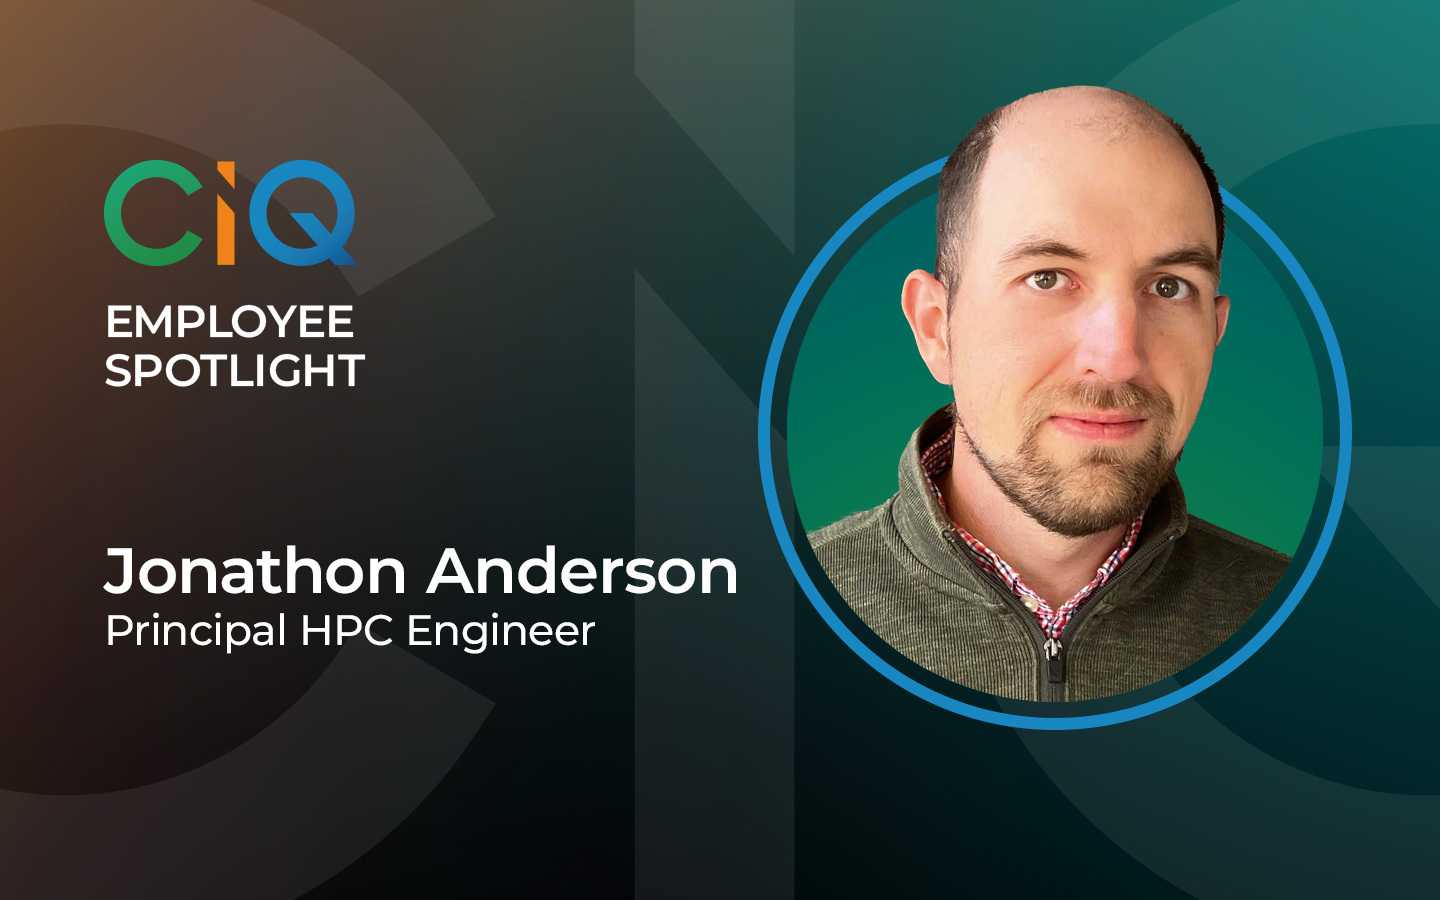 CIQ Employee Spotlight: Jonathon Anderson